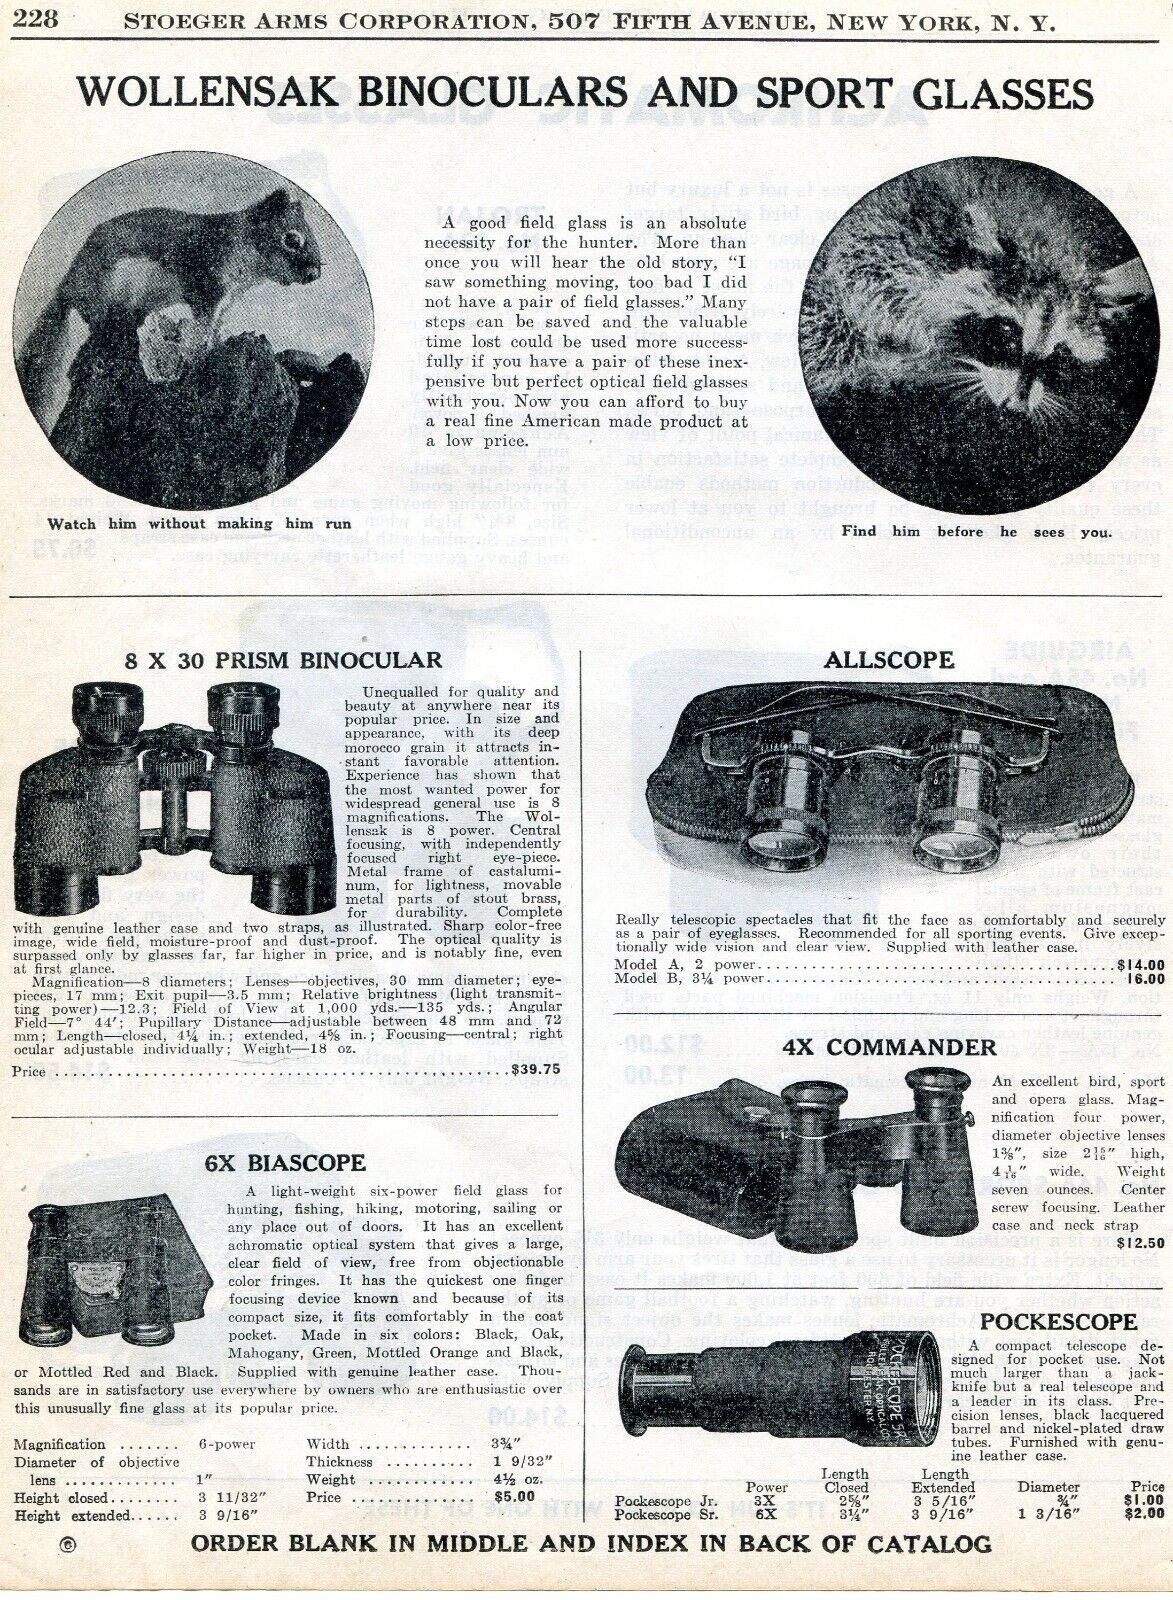 1941 Print Ad Wollensak Prism Binocular Allscope Commander Biascope Pockescope